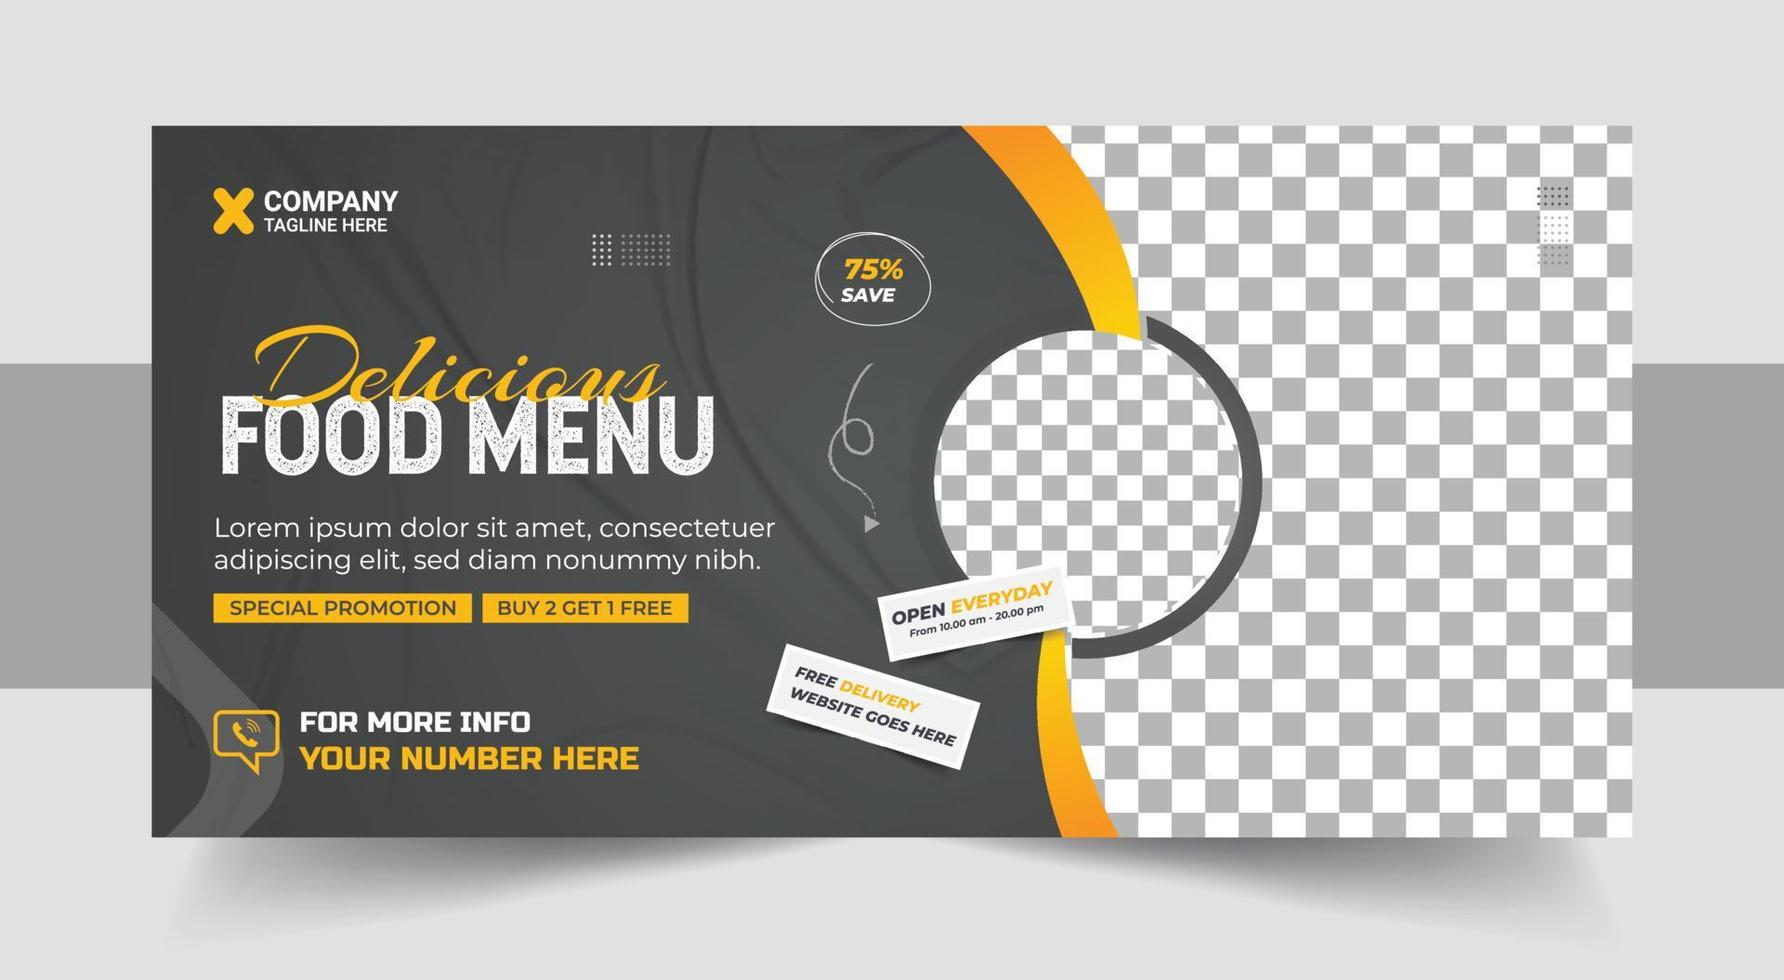 Restaurant food menu social media marketing web banner. Pizza, burger or hamburger online sale promotion video thumbnail. Fast food website background. Food flyer with logo vector